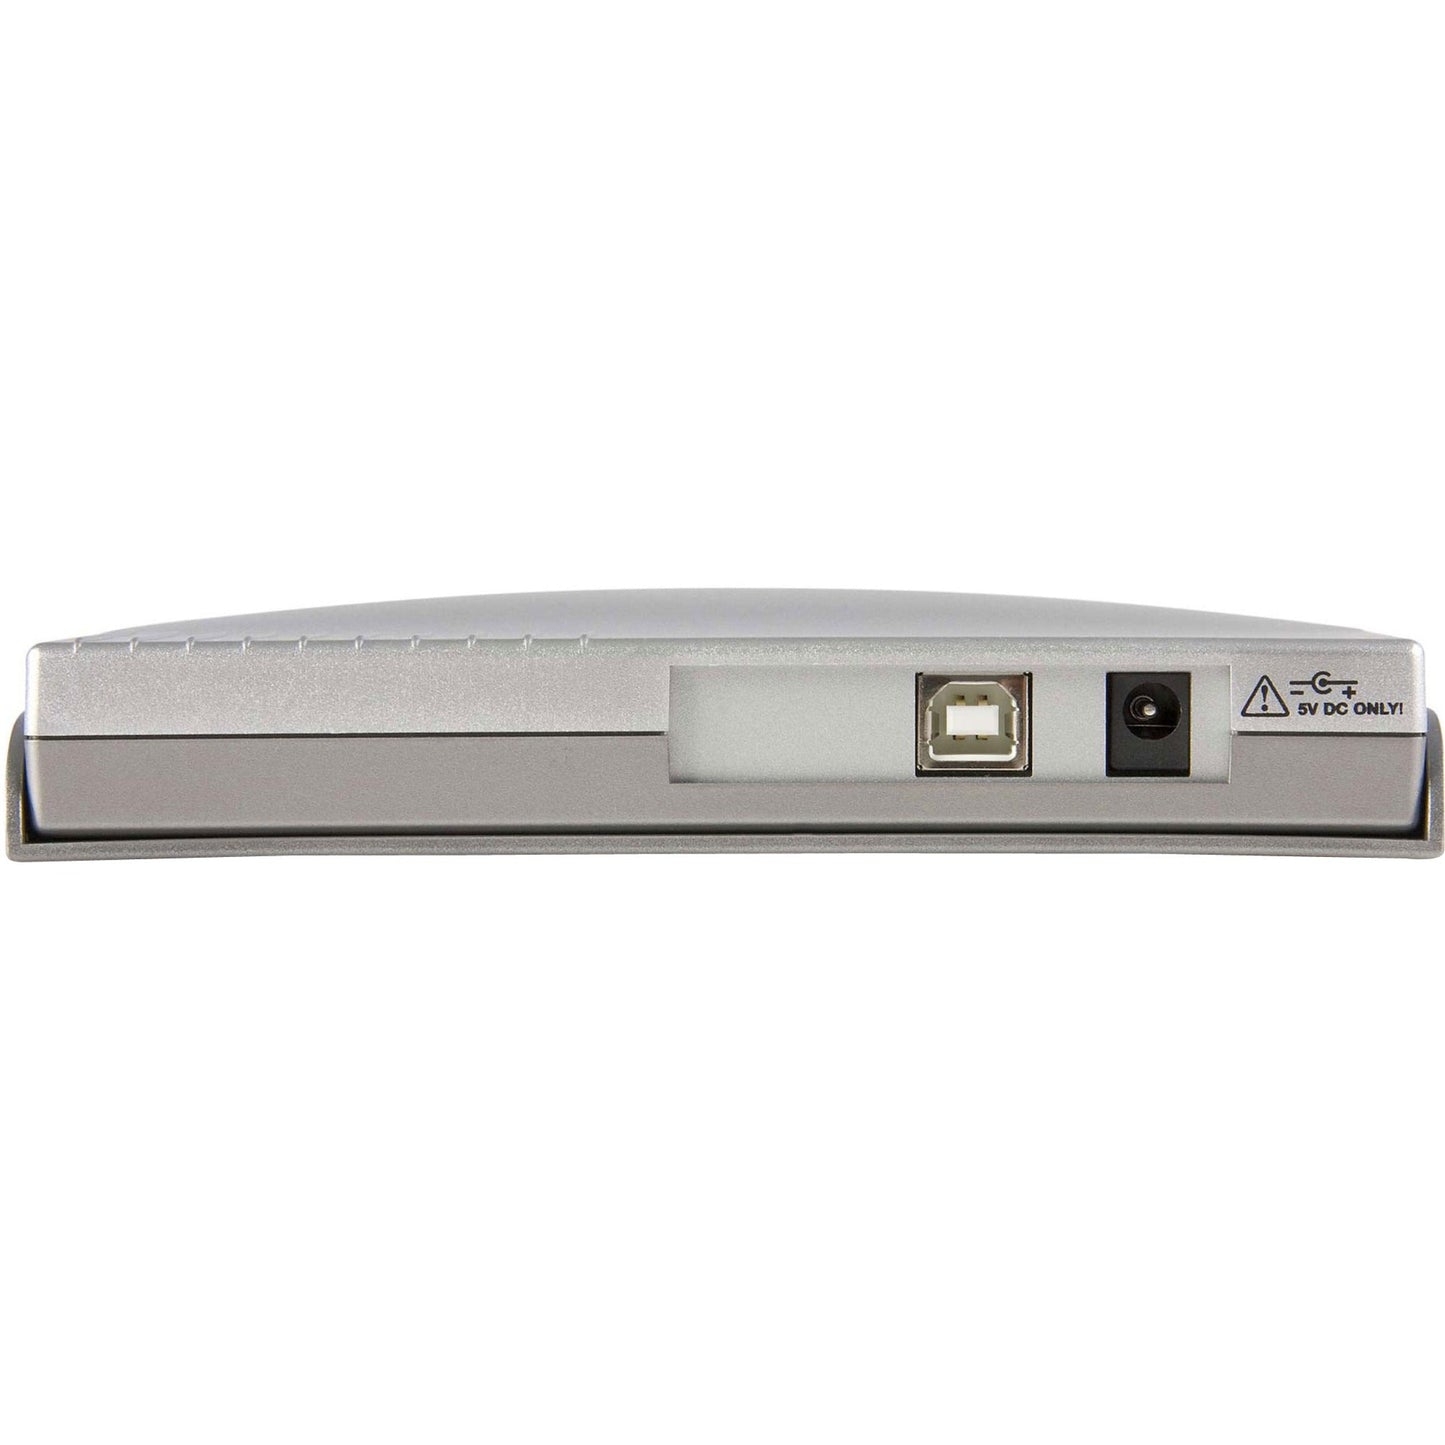 StarTech.com USB to Serial Adapter Hub - 8 Port - DB9 (9-pin) - USB Serial - FTDI USB to RS232 Adapter - USB Serial